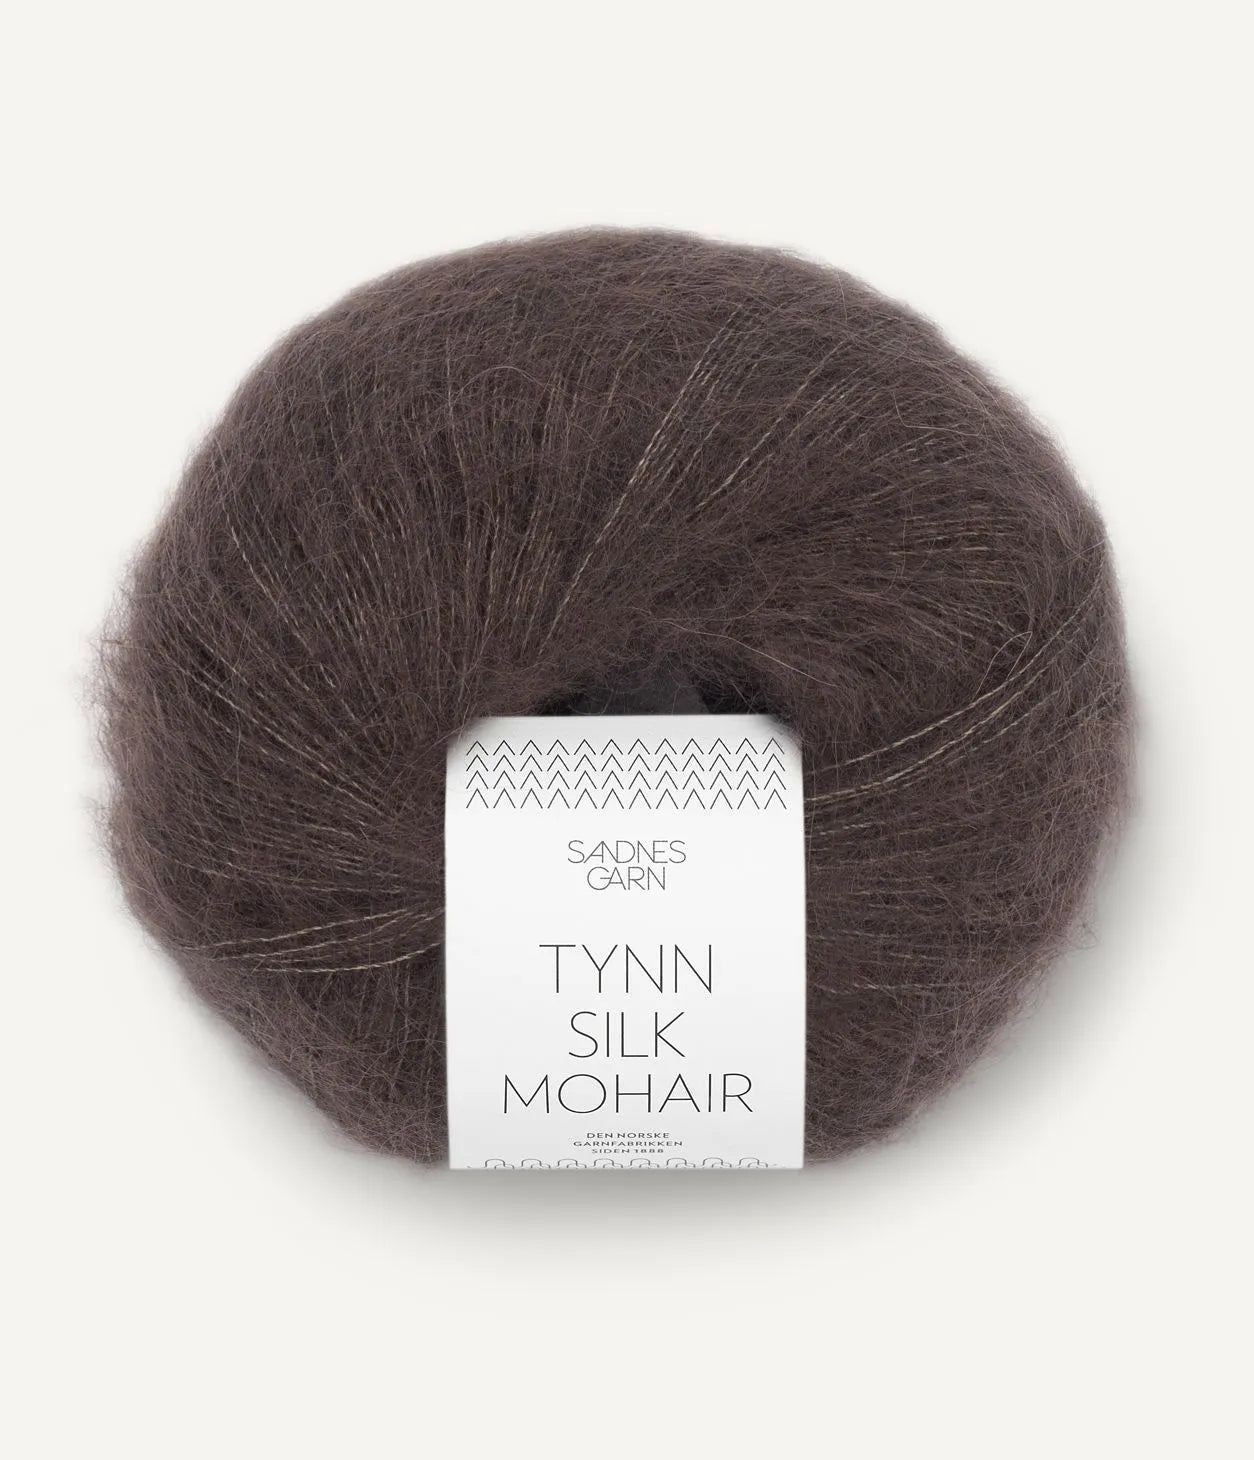 Sandnes Garn Tynn Silk Mohair UK - Dark Chocolate 3880